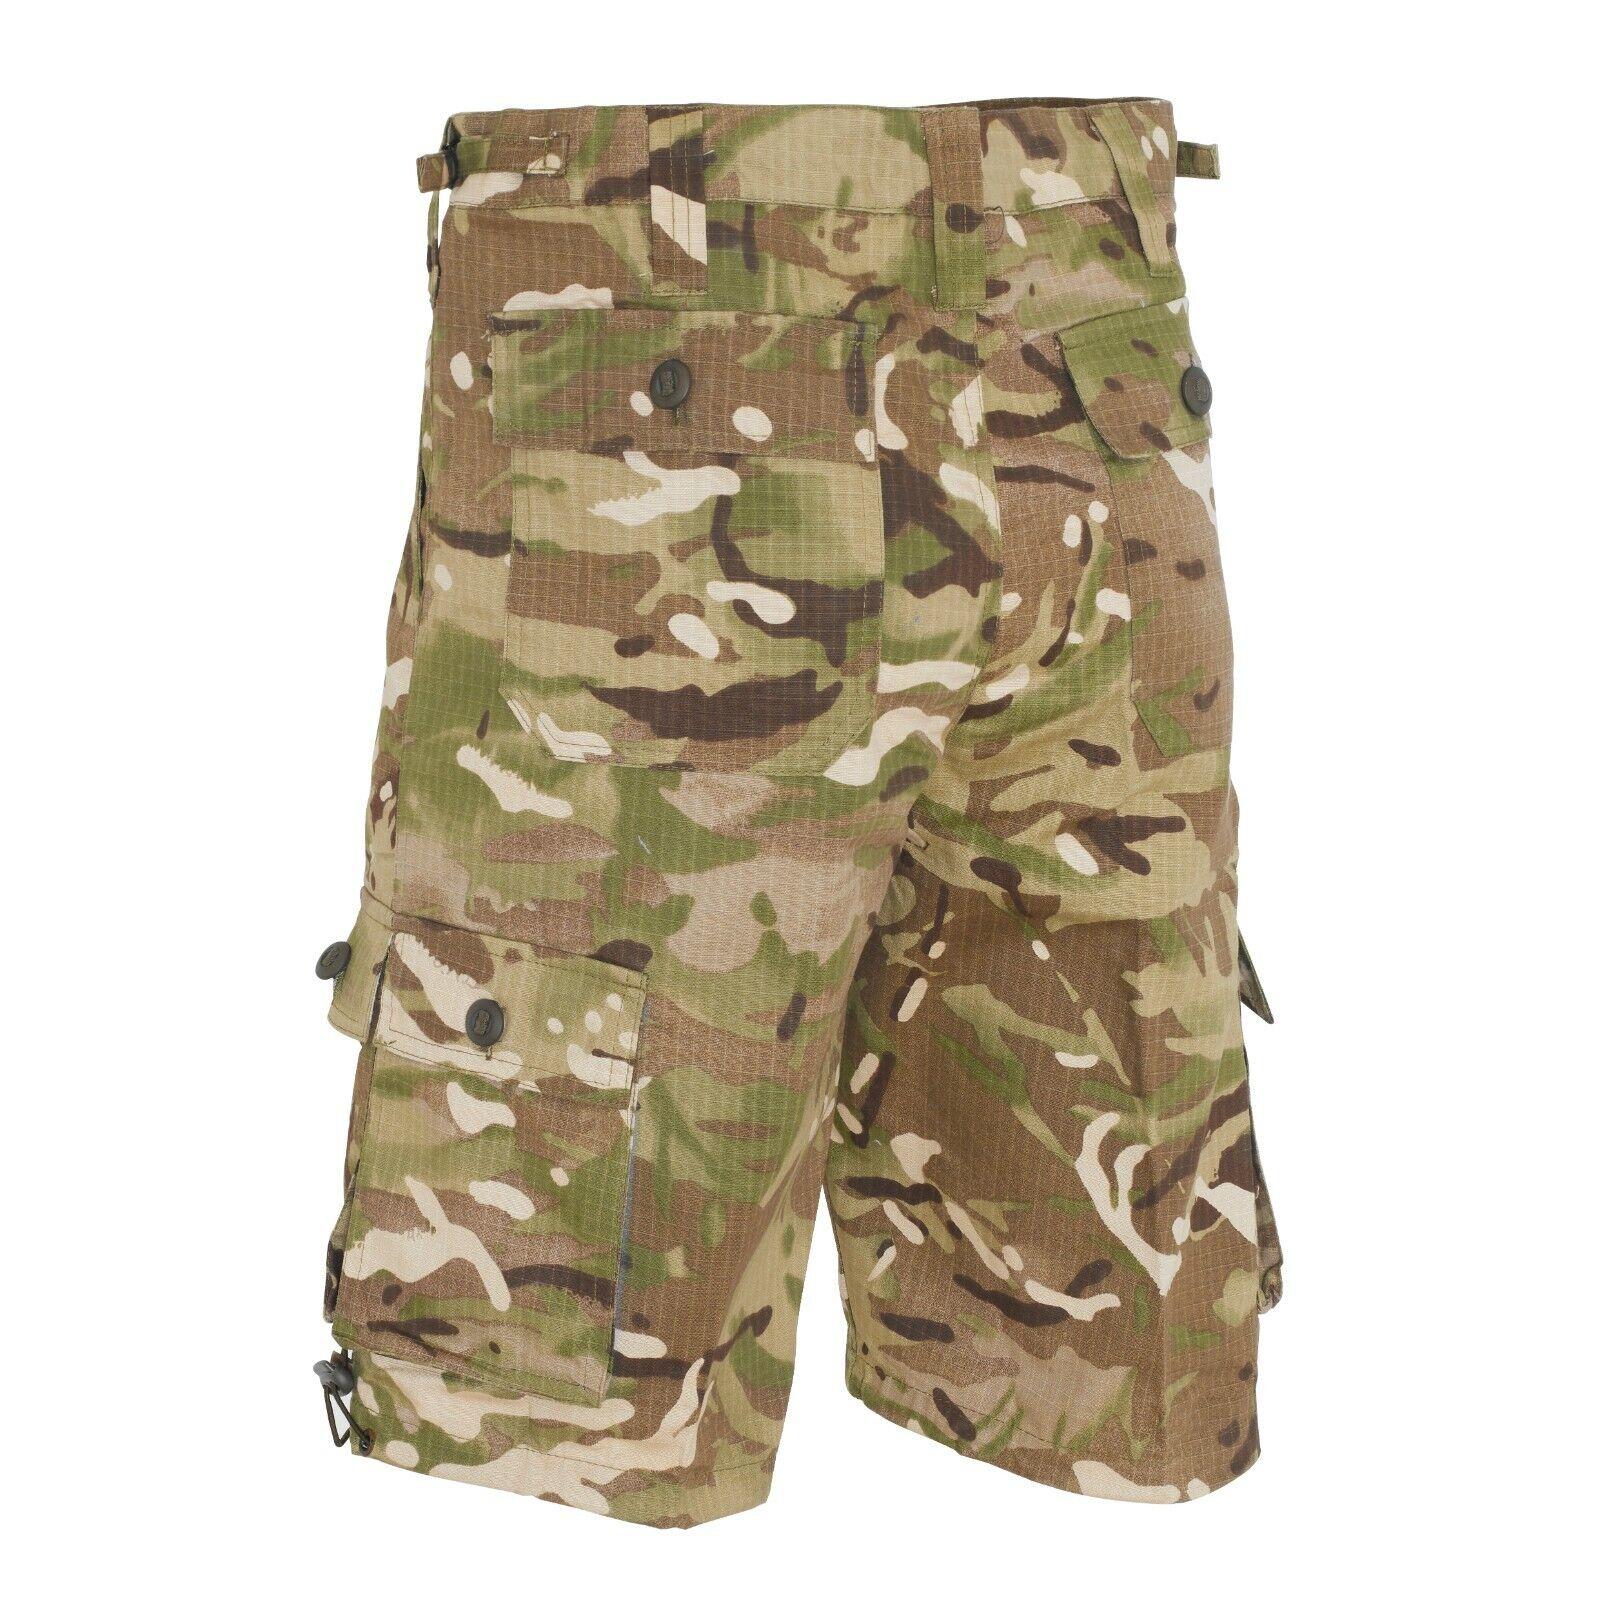 British army style mtp shorts PCS 3/4 Multi Camo Combat Warm Weather